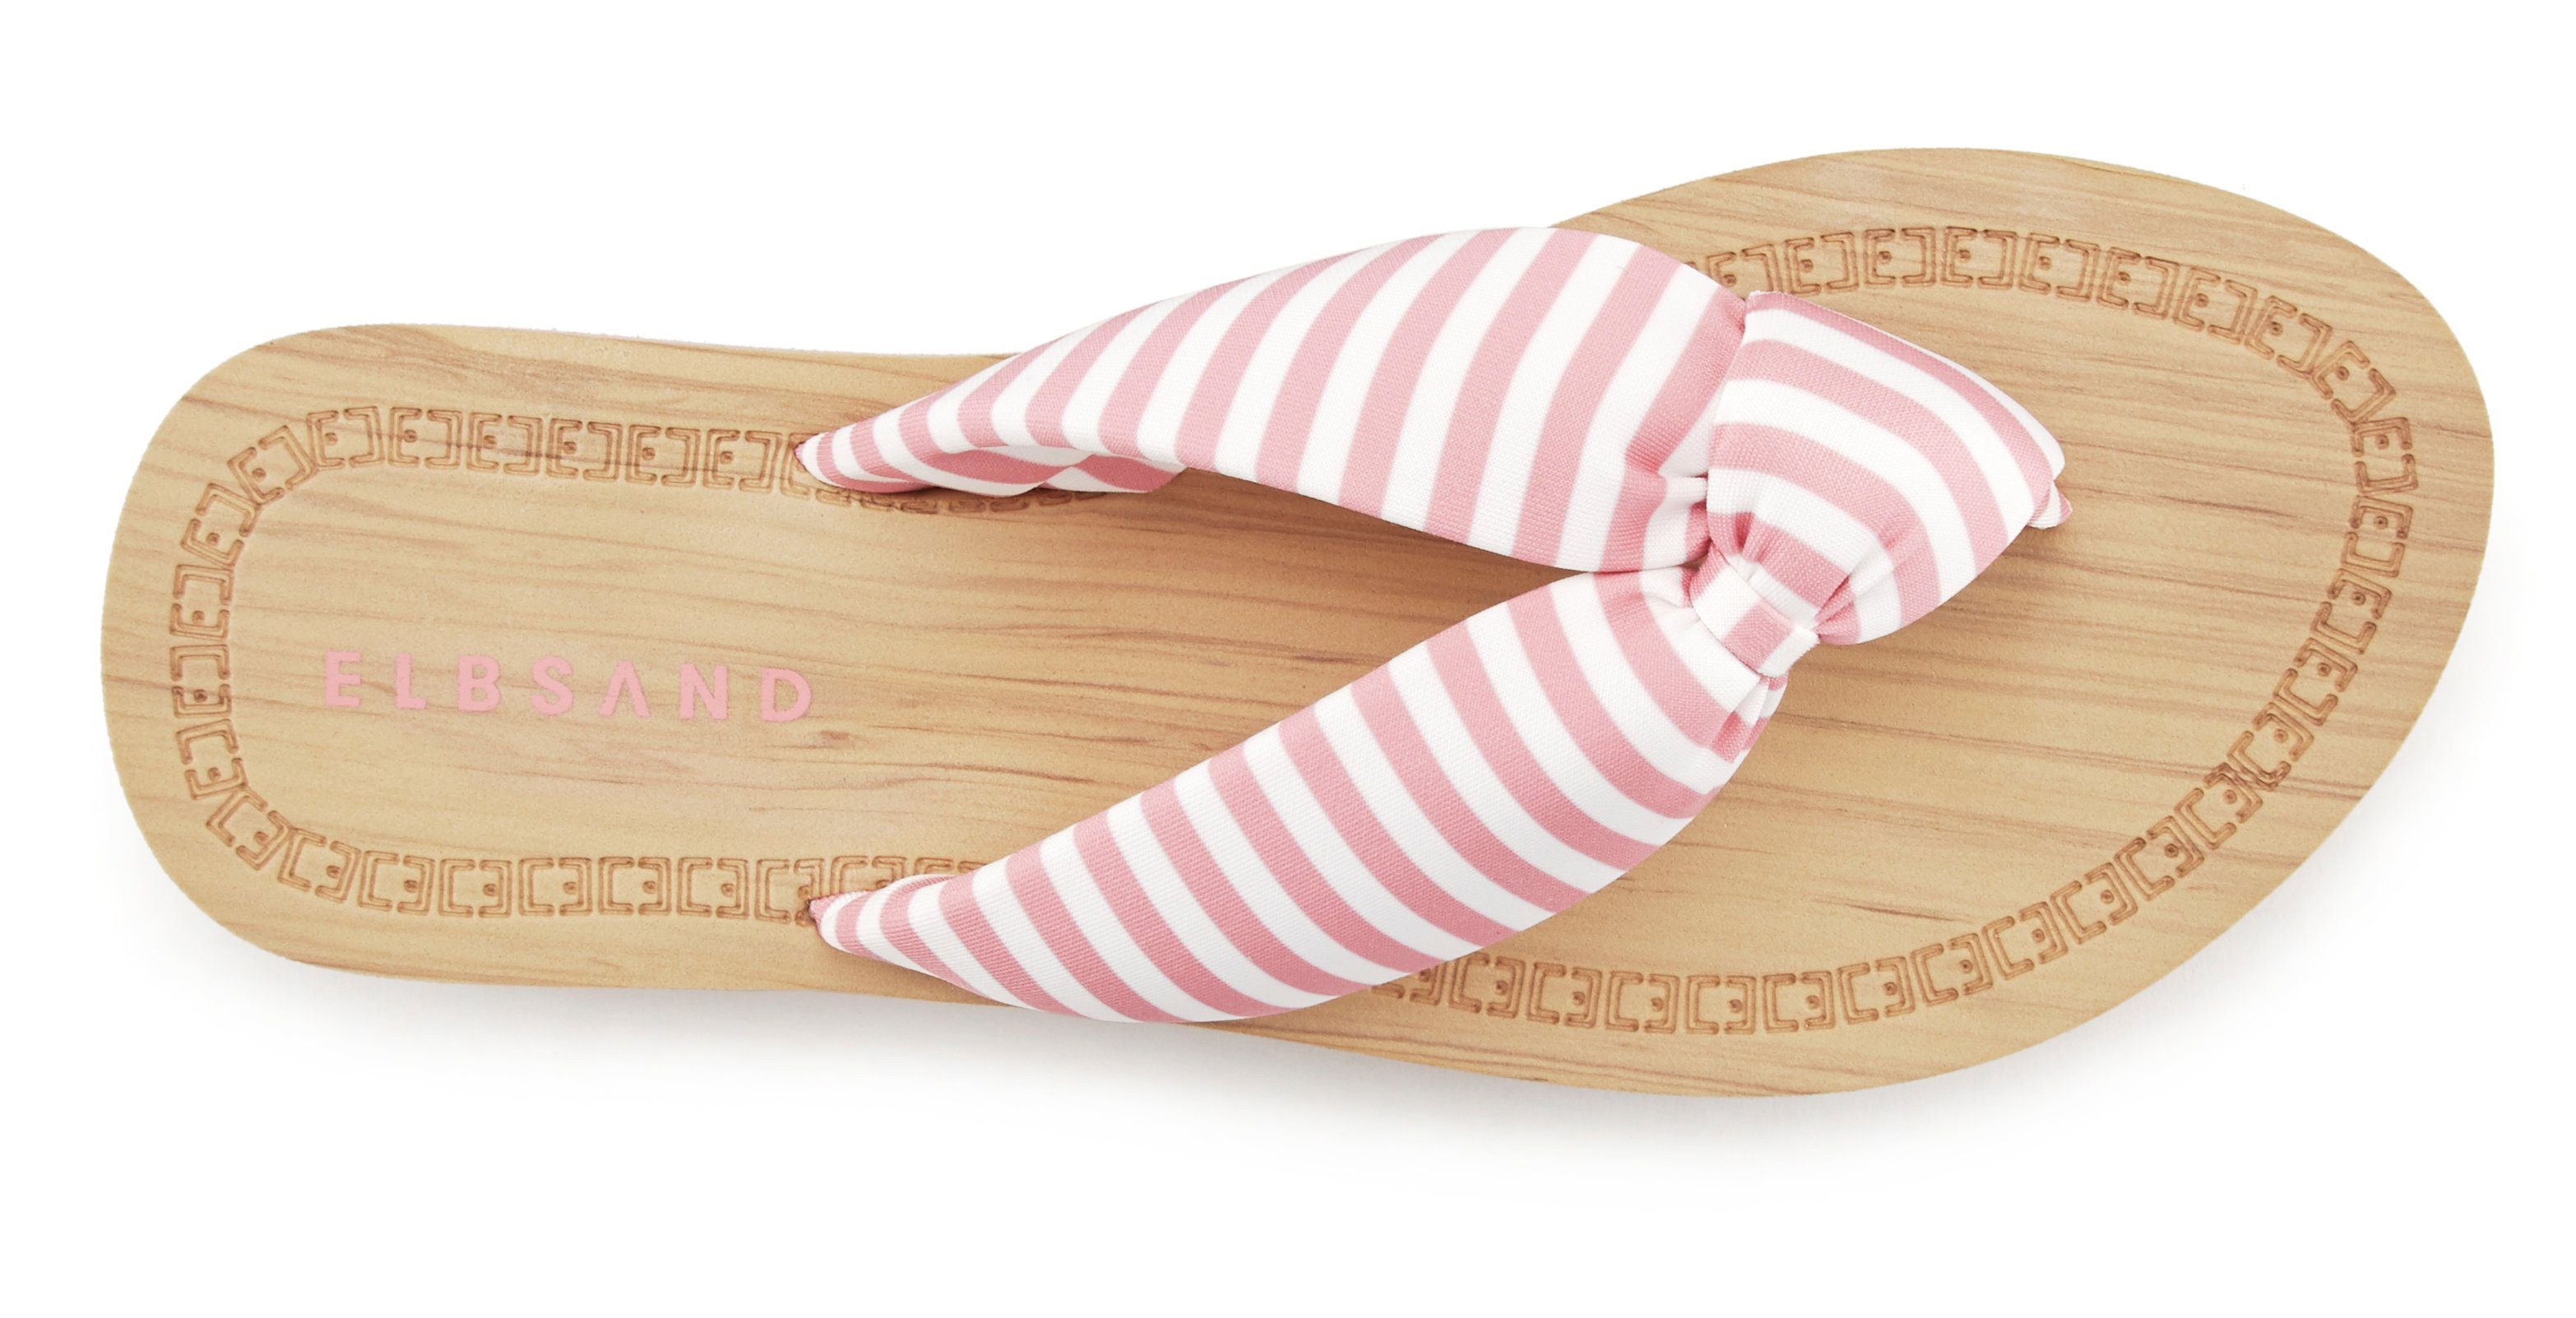 Elbsand Badezehentrenner Sandale, Pantolette, ultraleicht VEGAN rosa-gestreift Badeschuh